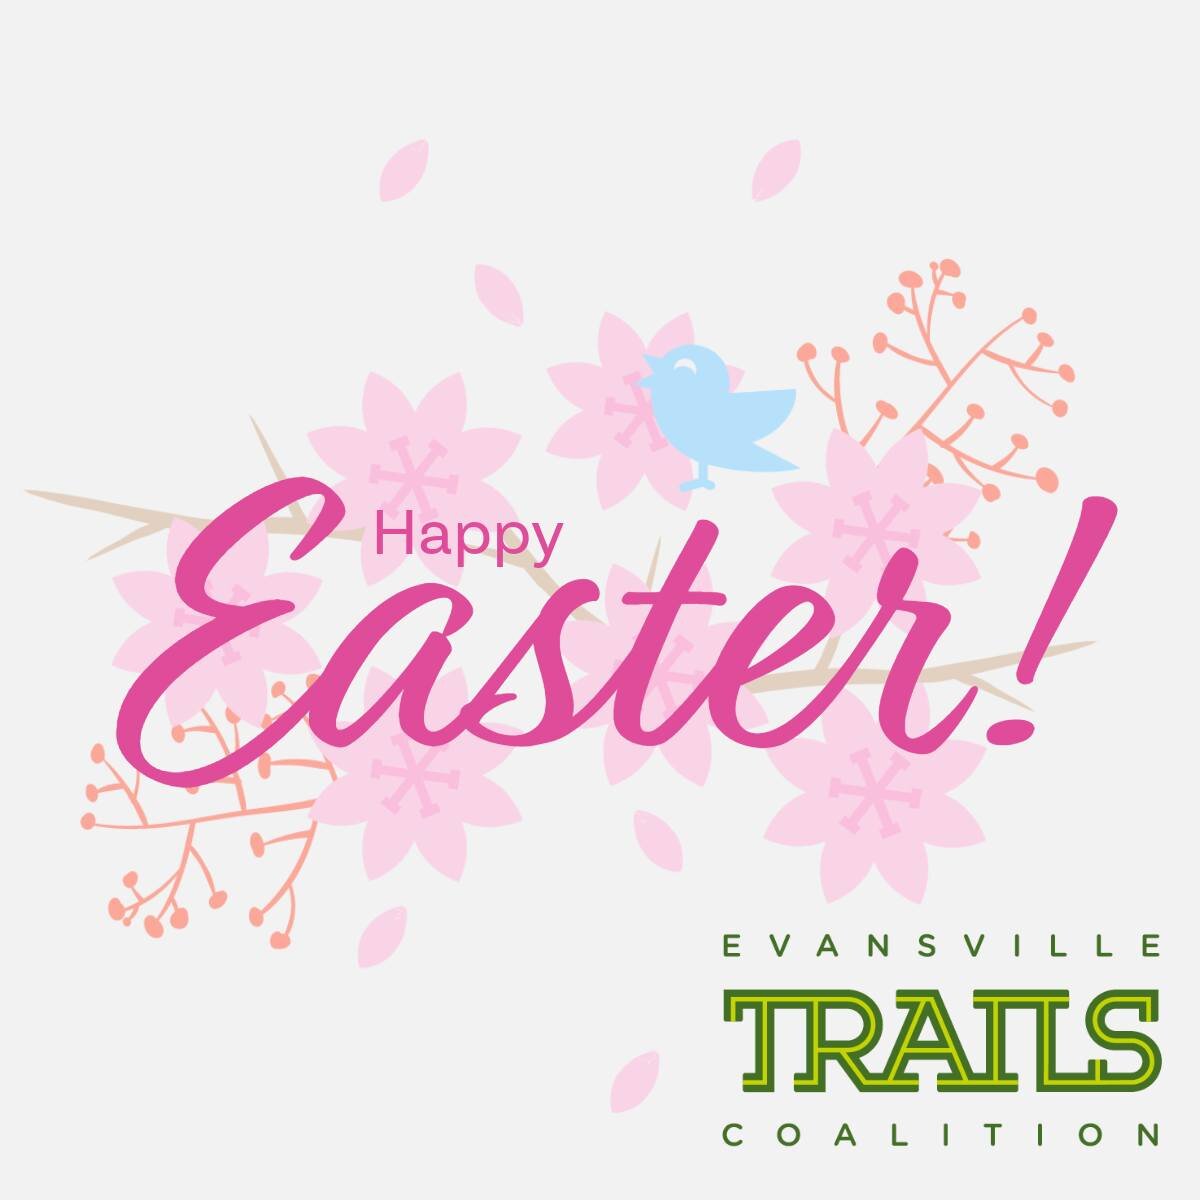 Happy Easter, Trailblazers!